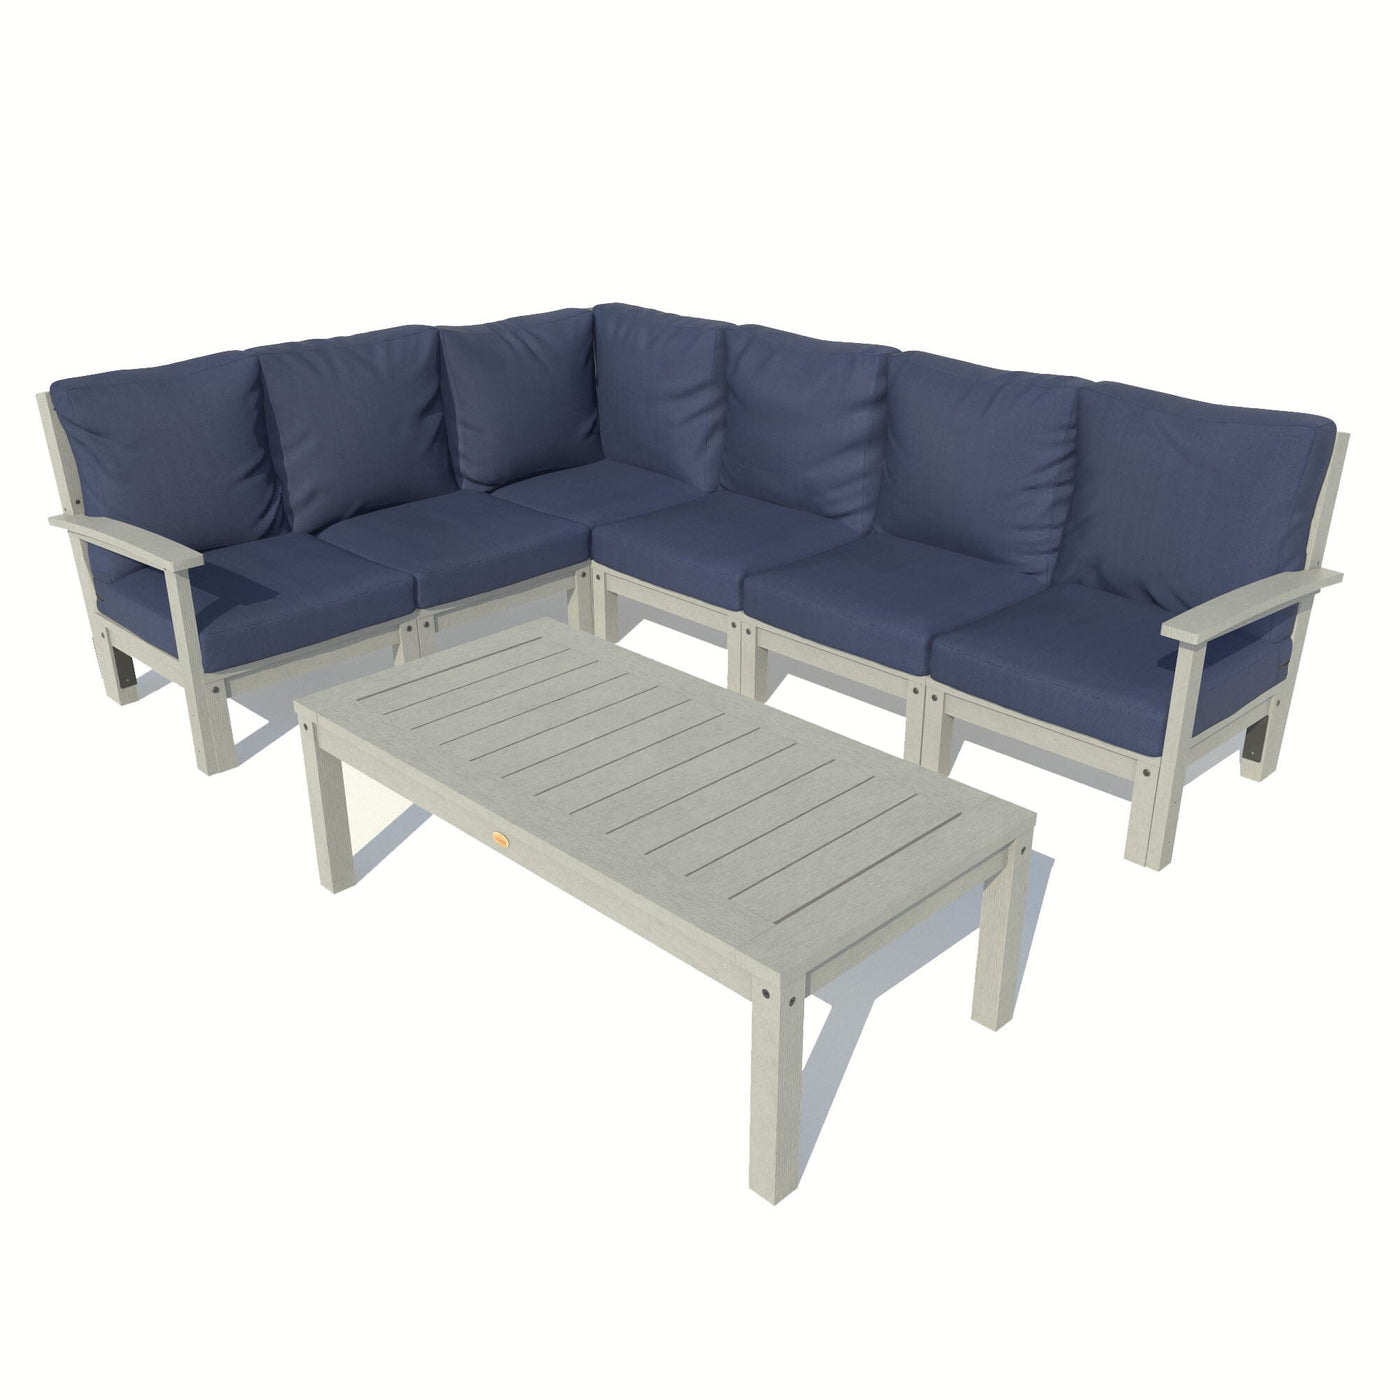 Bespoke Deep Seating: 7 Piece Sectional Sofa Set with Conversation Table Deep Seating Highwood USA Navy Coastal Teak 